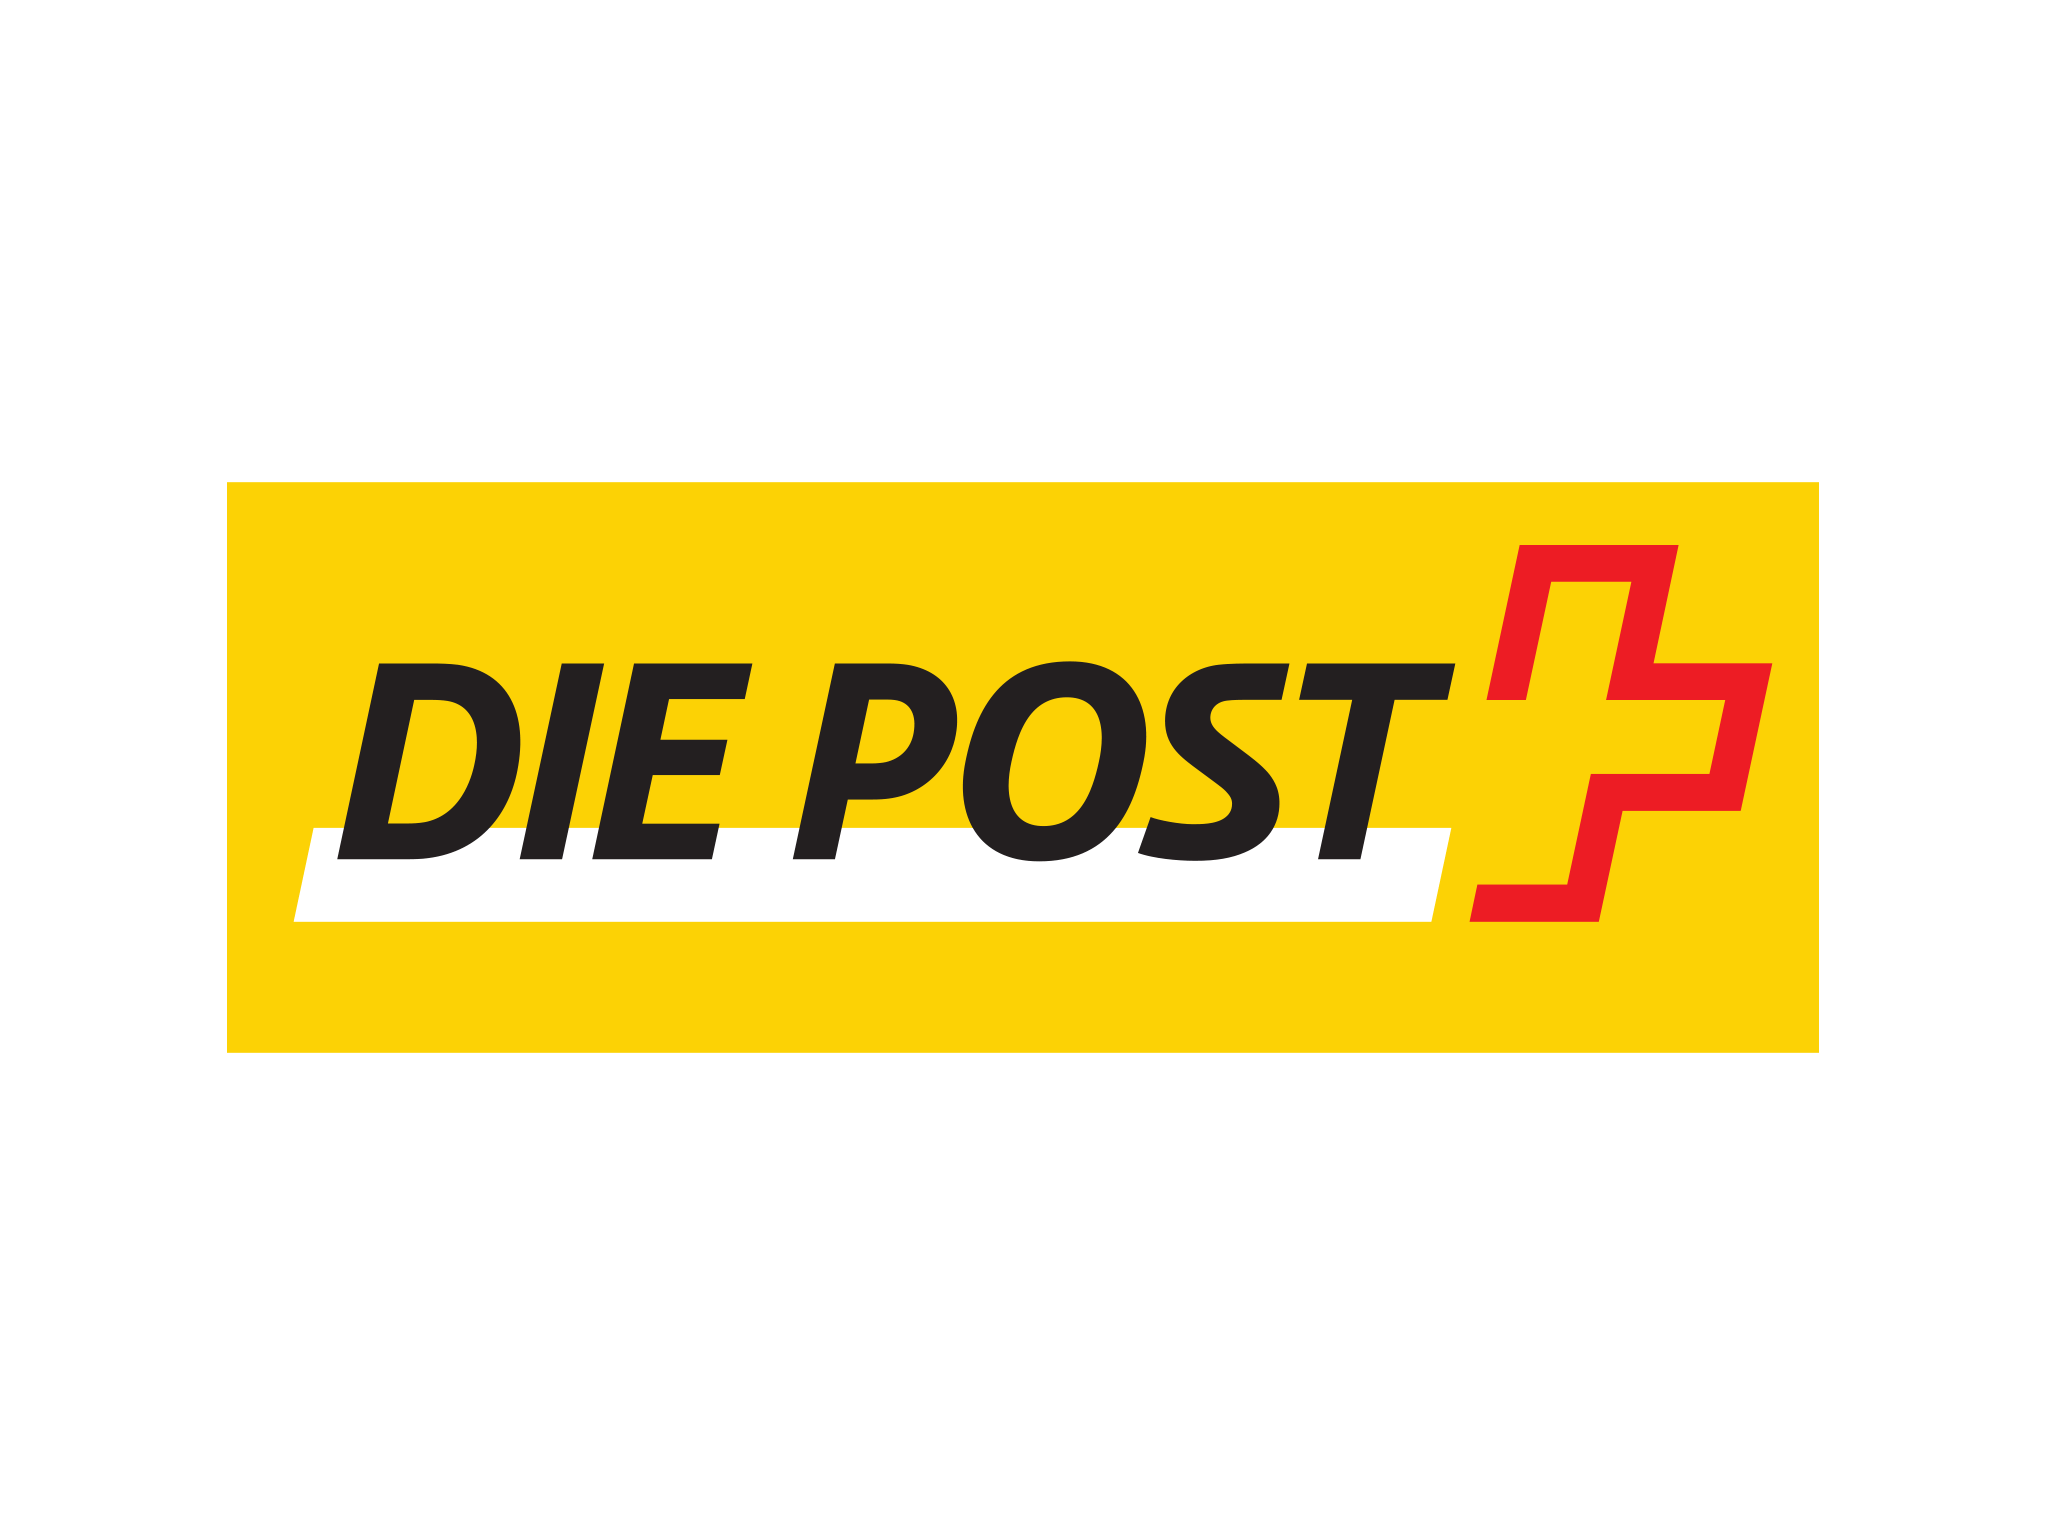 Post de. Post Ch. Post logo. Post.Ch logo. Die Post картинки.